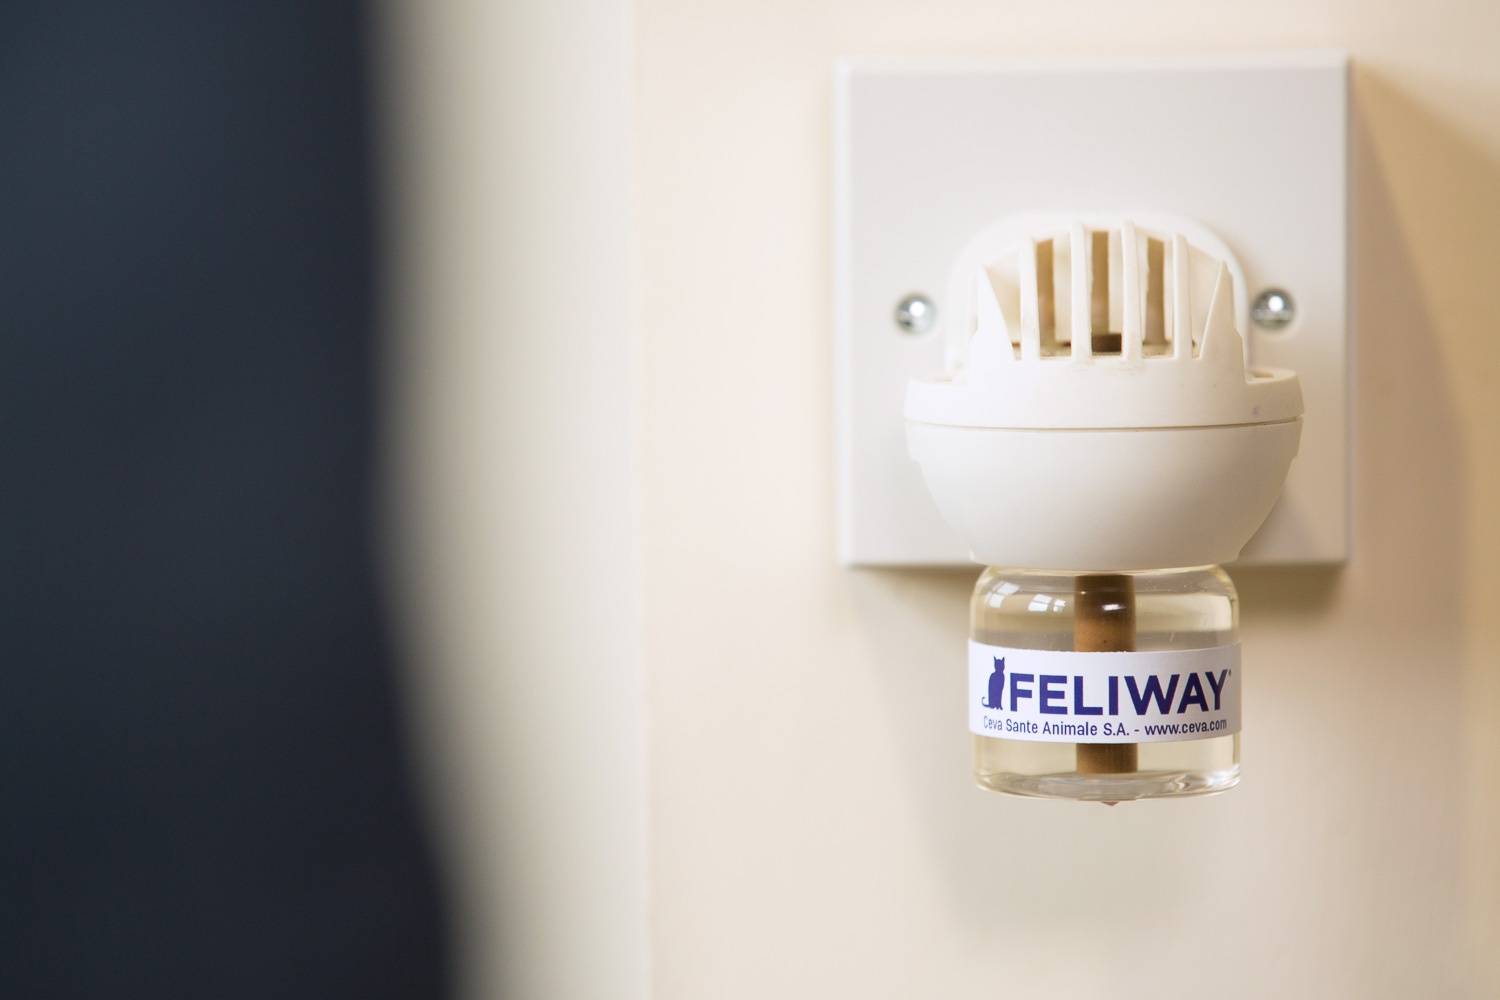 Feliway Classic Duffiser plugged to help keep cat calm